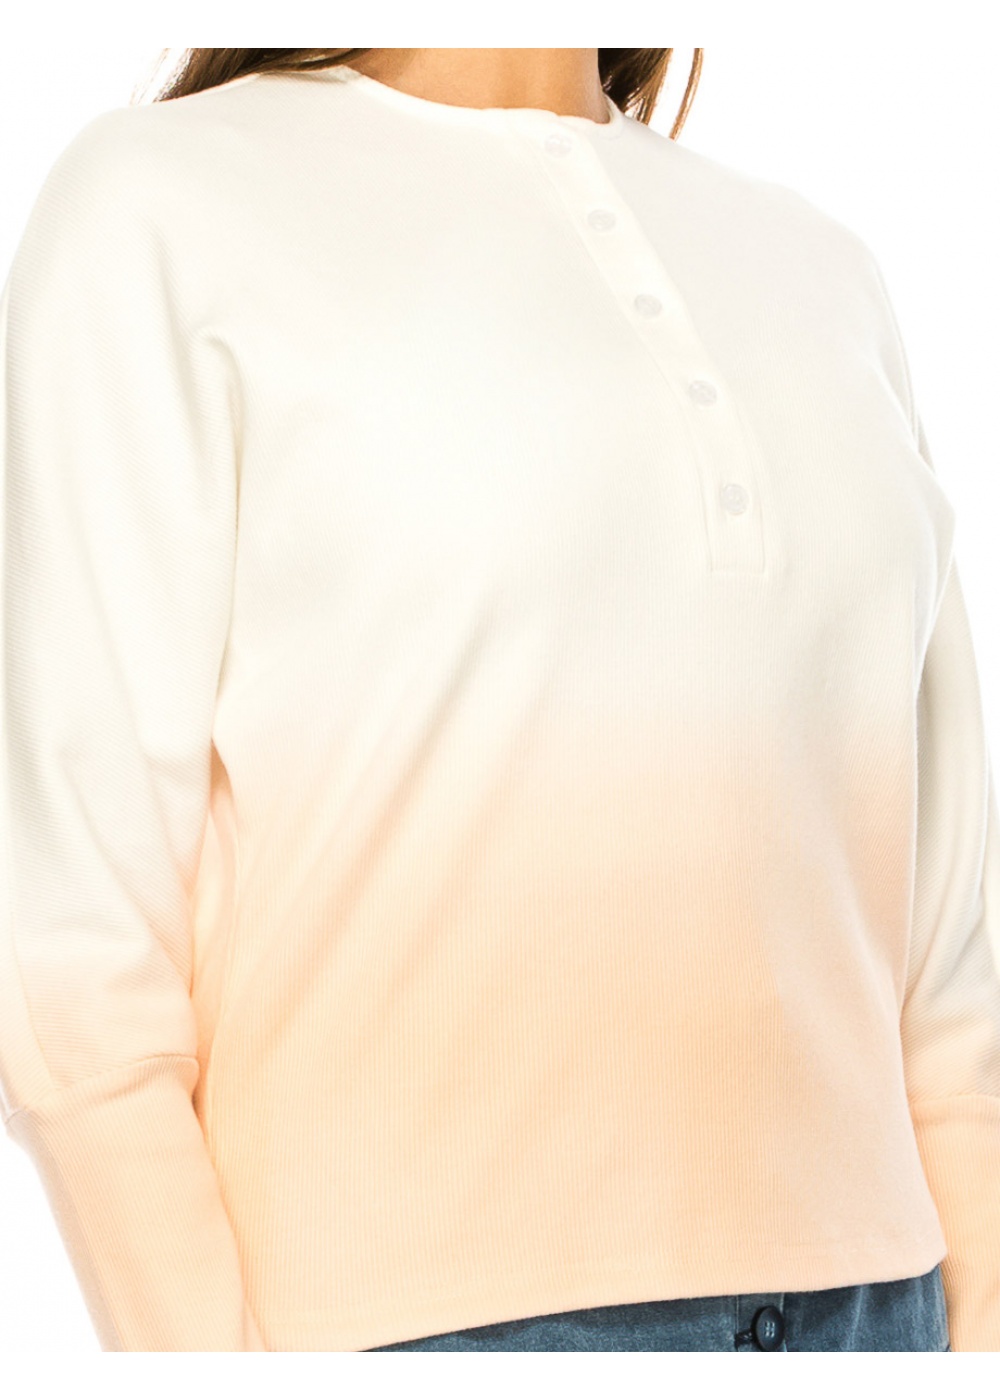 Orange Long Sleeve T-Shirt With Quarter Button